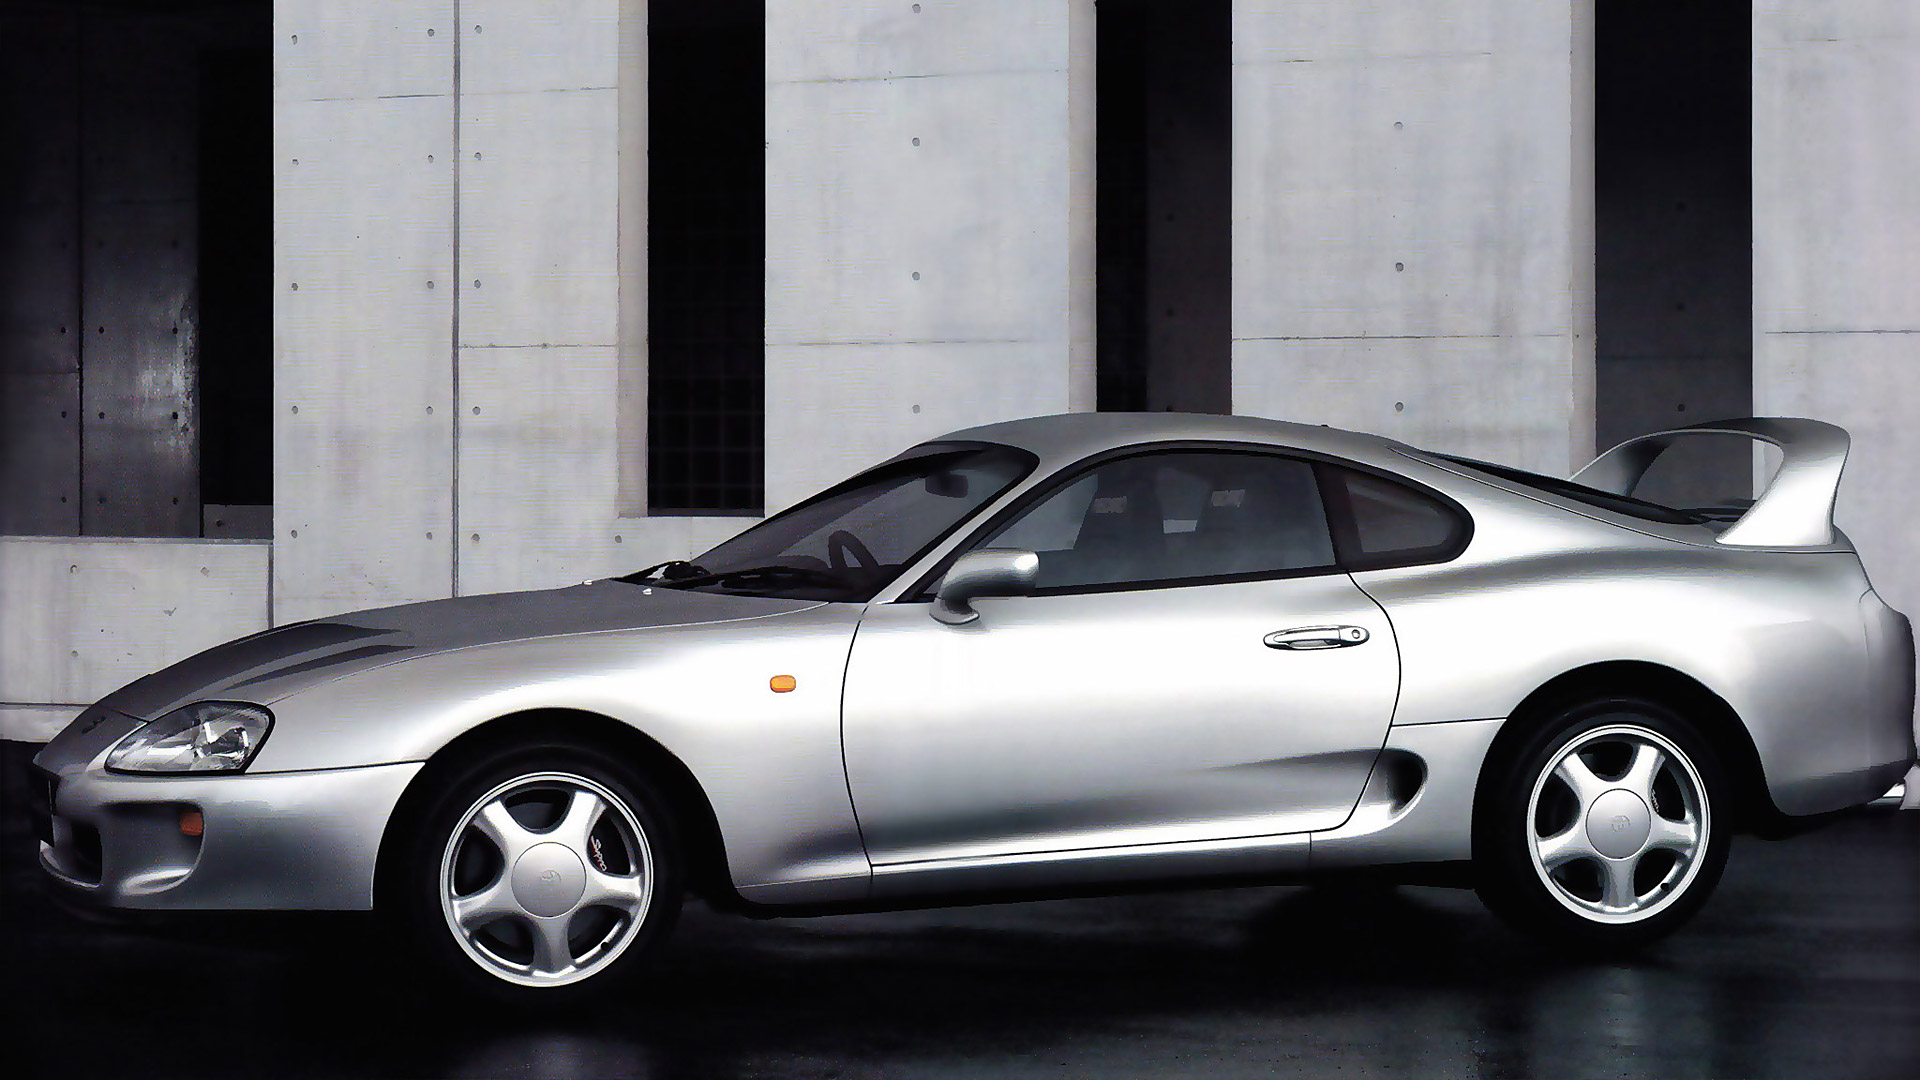  1993 Toyota Supra Wallpaper.